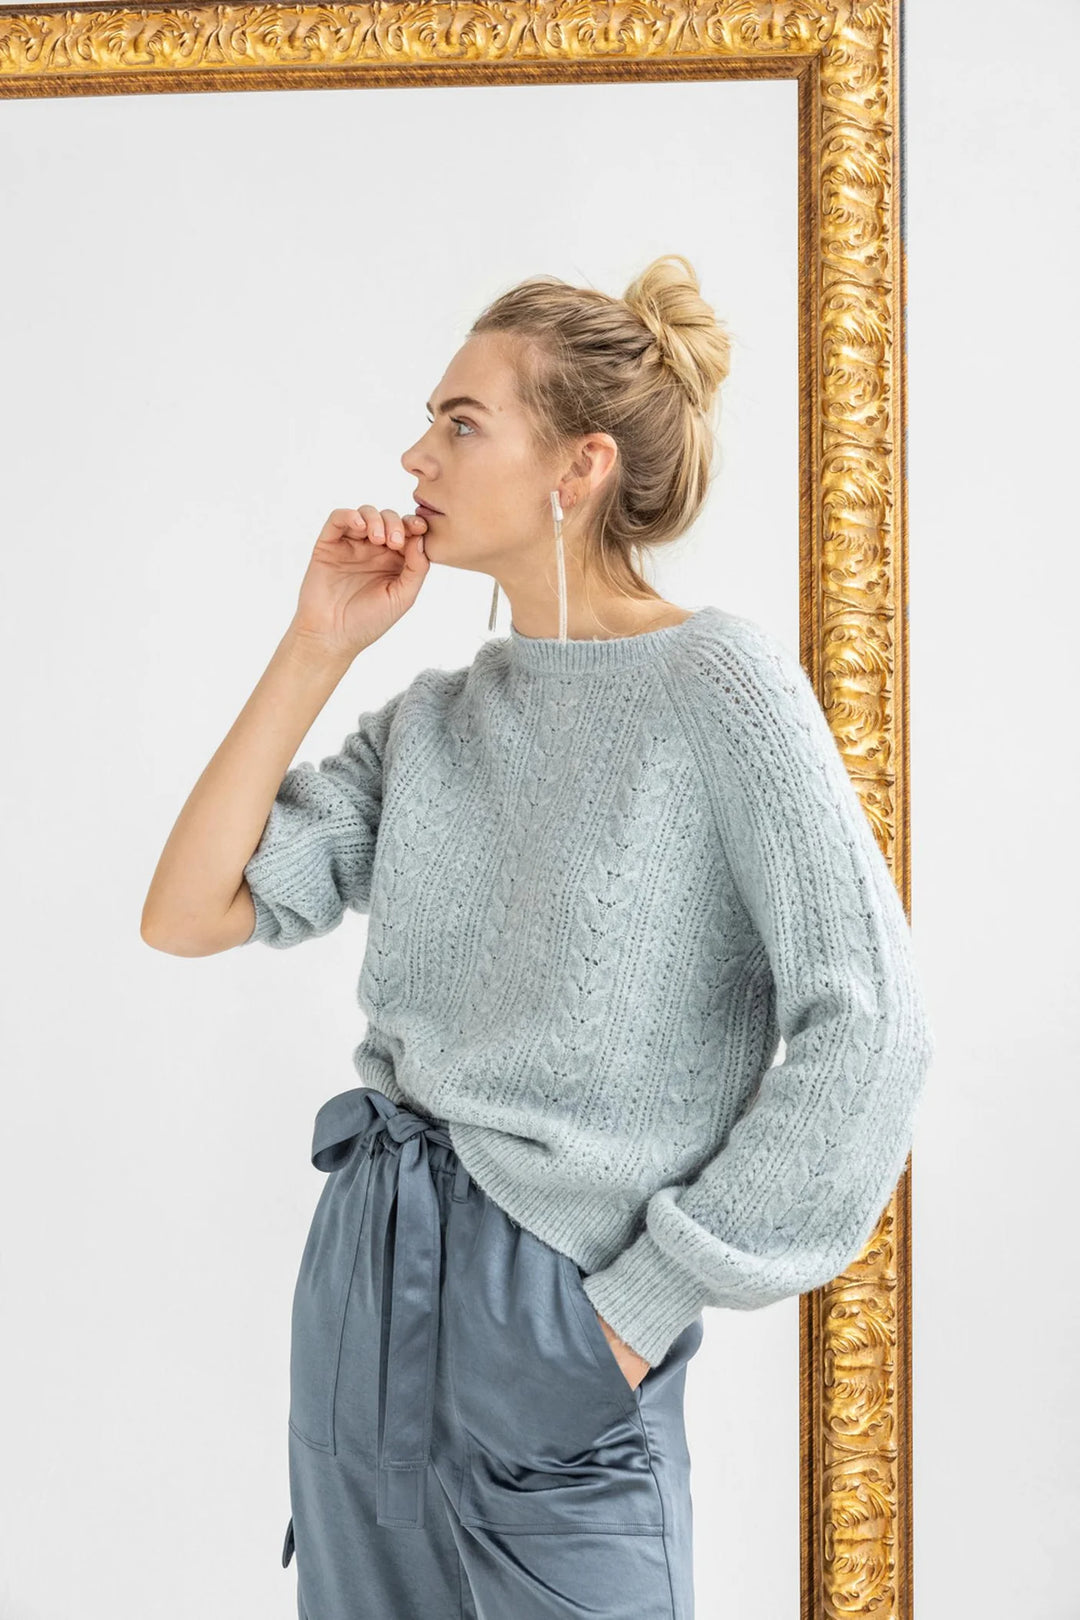 Stitch Pullover Sweater